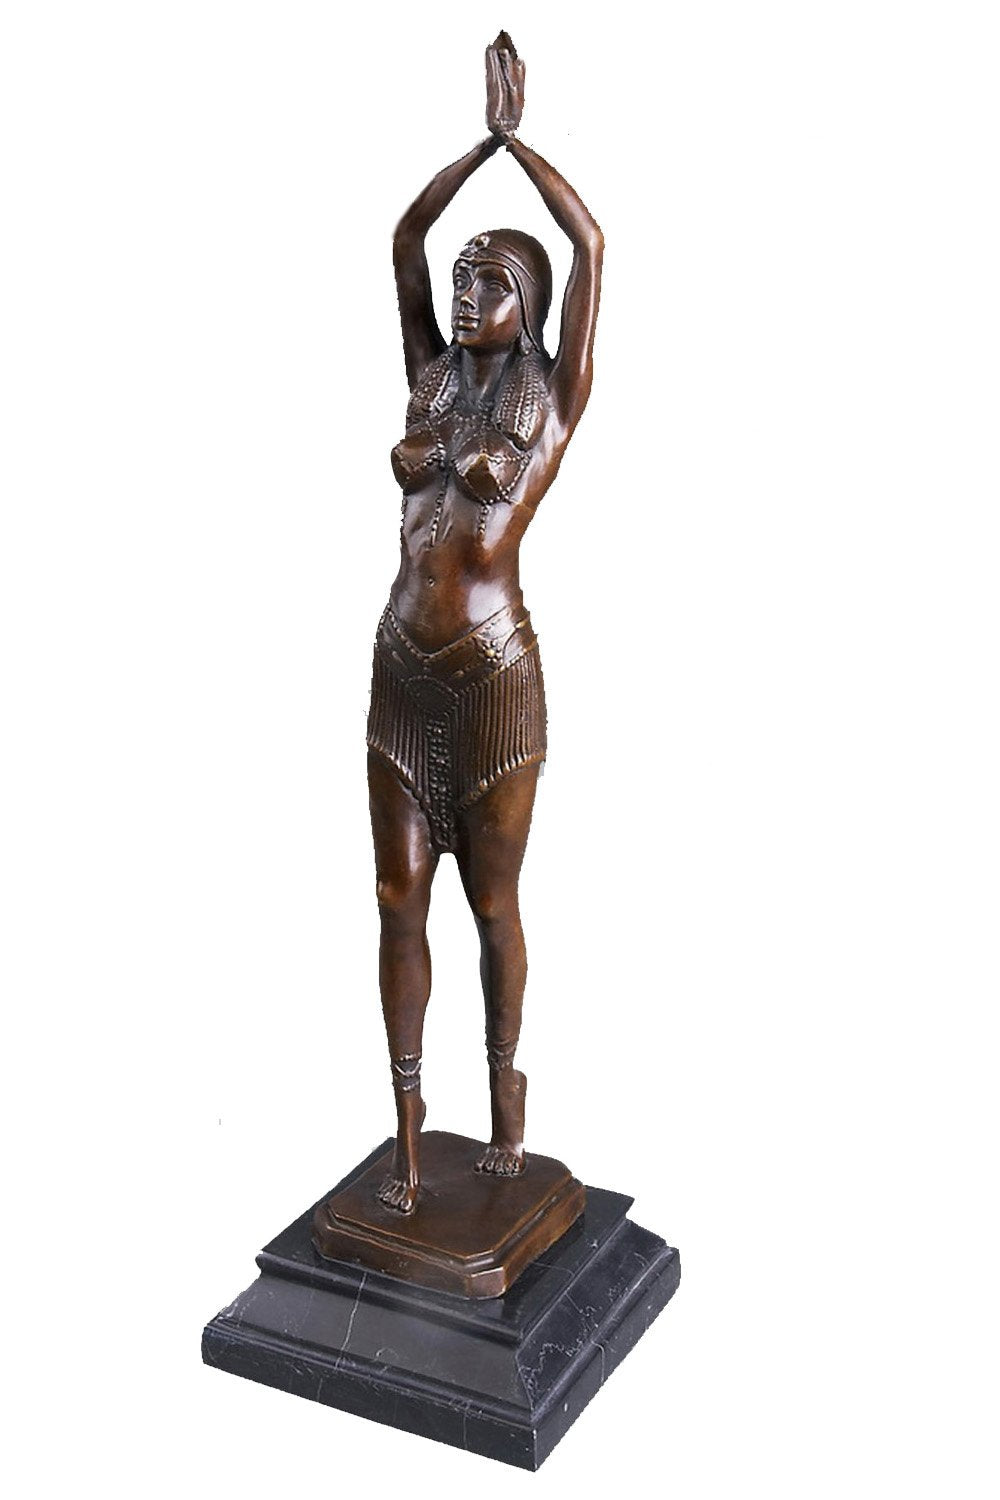 TPY-435 bronze sculpture